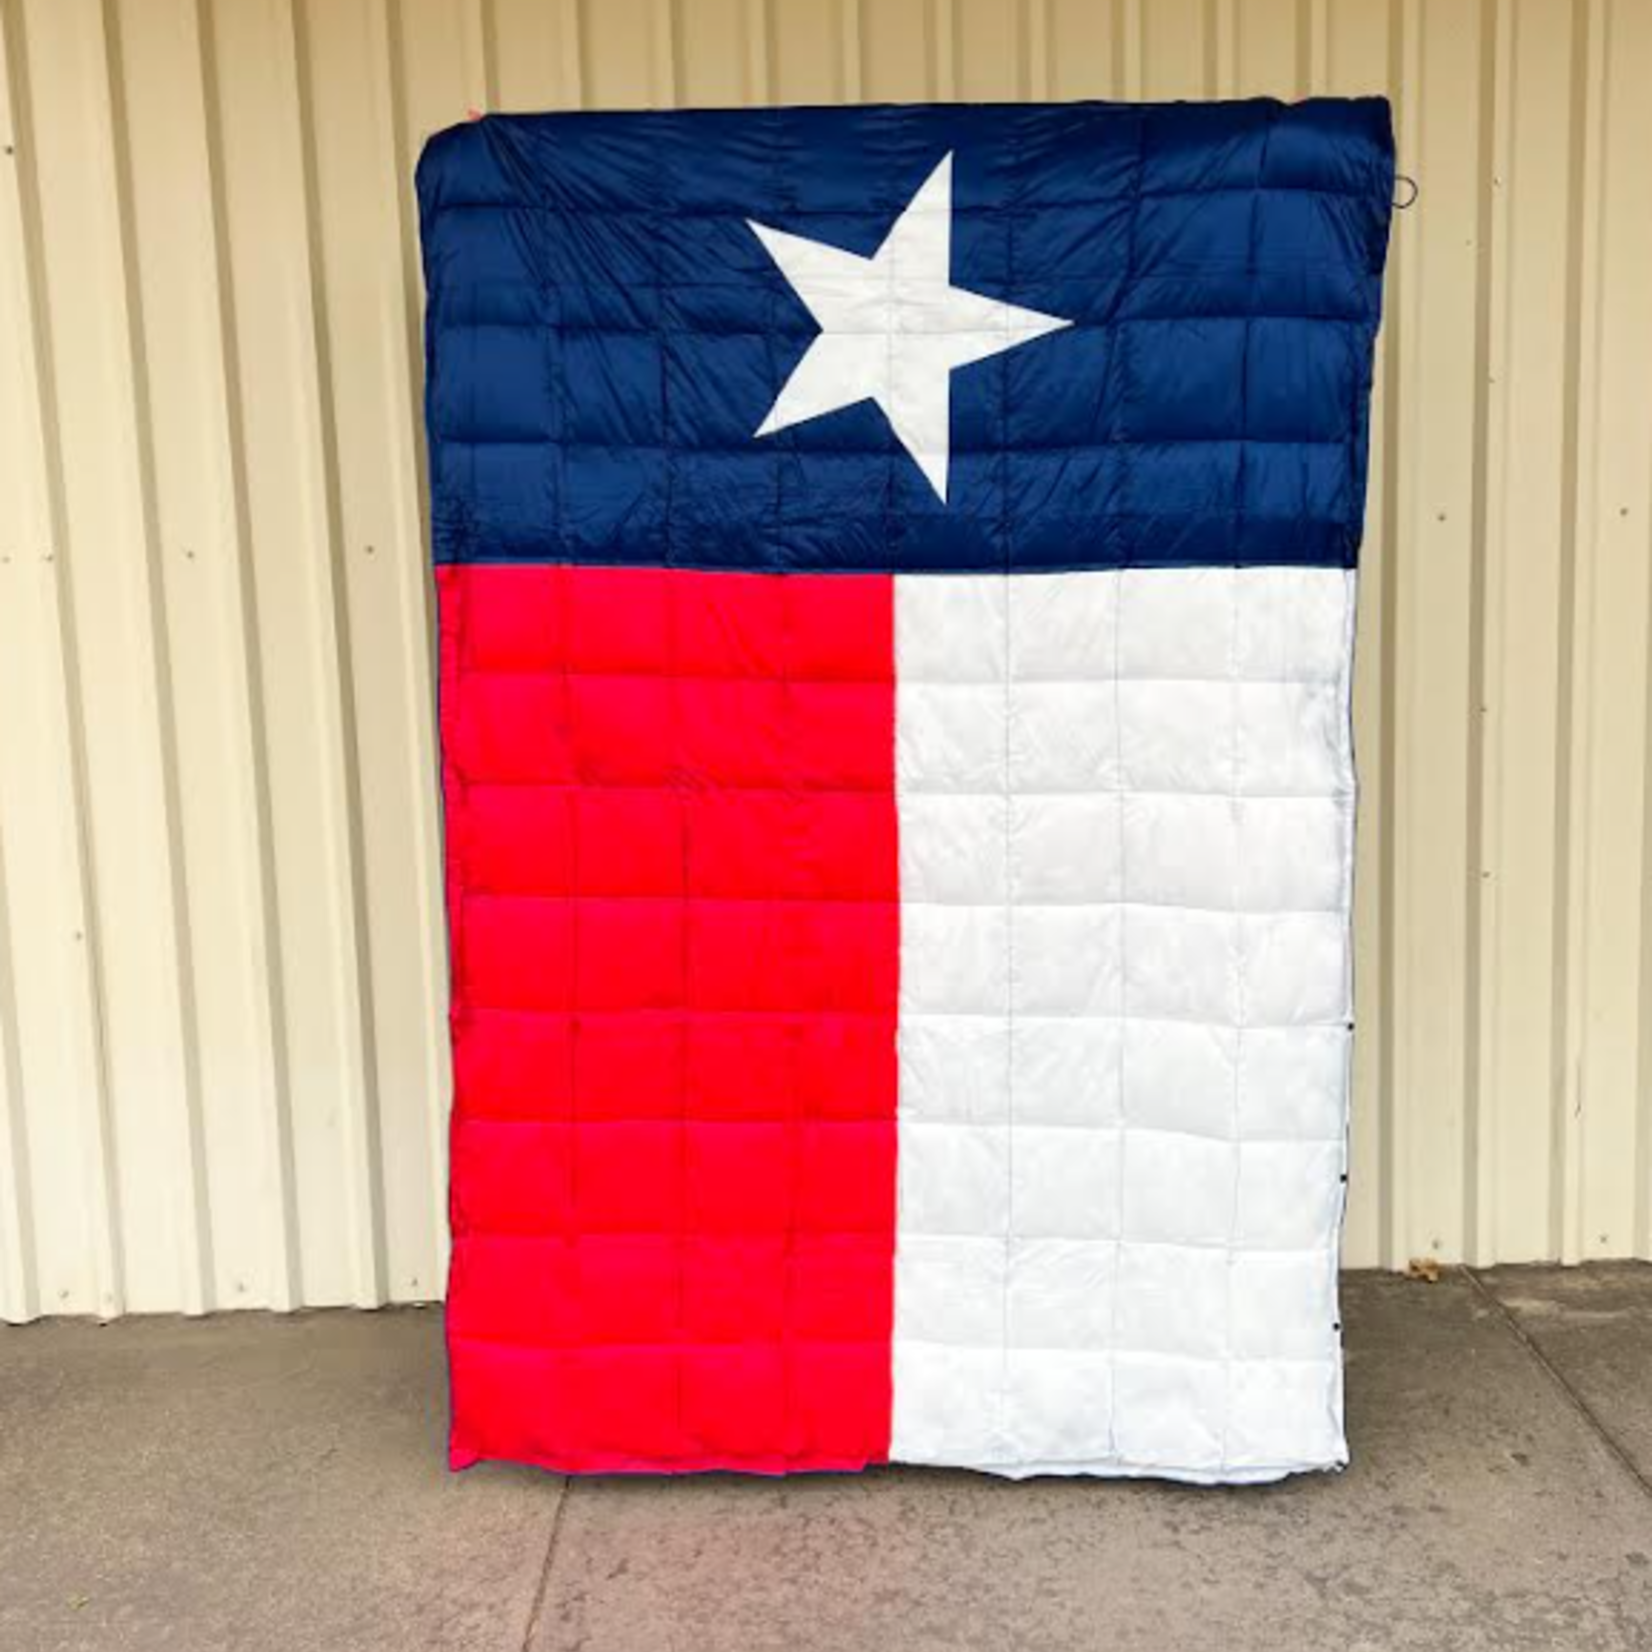 H3 Sportgear Texas Flag Camping Blanket